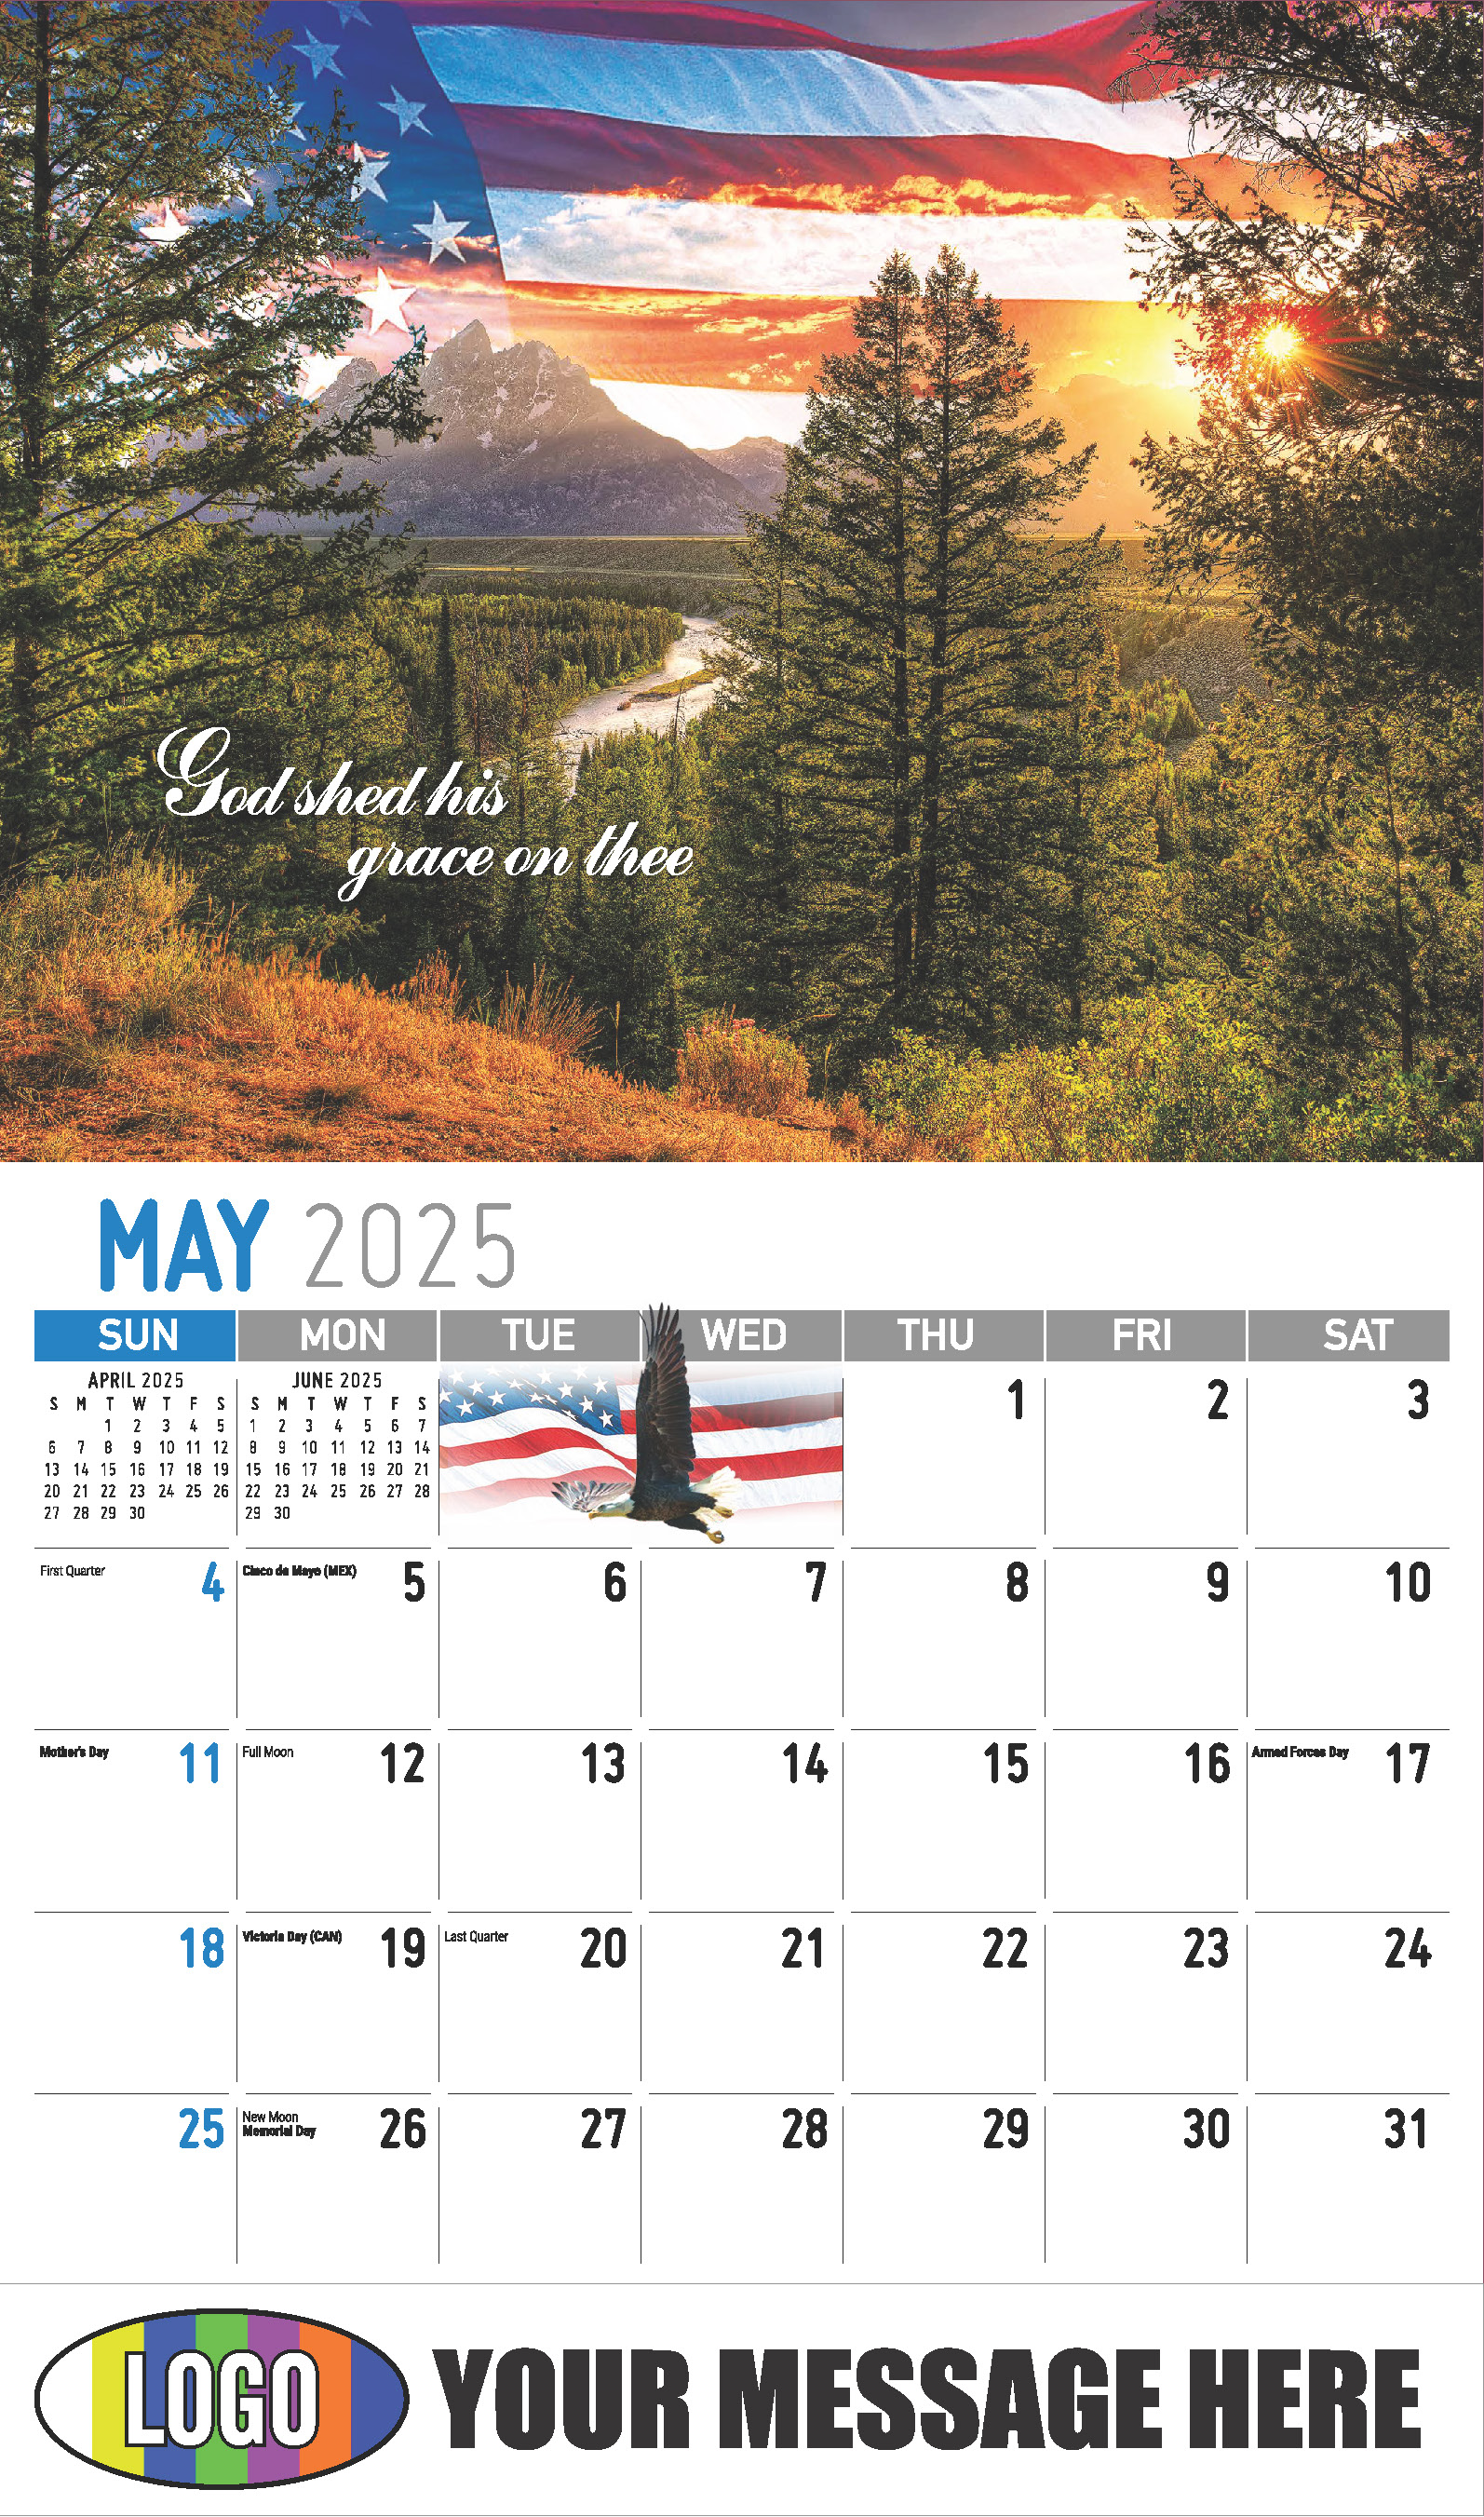 America the Beautiful  2025 Business Advertising Wall Calendar - May